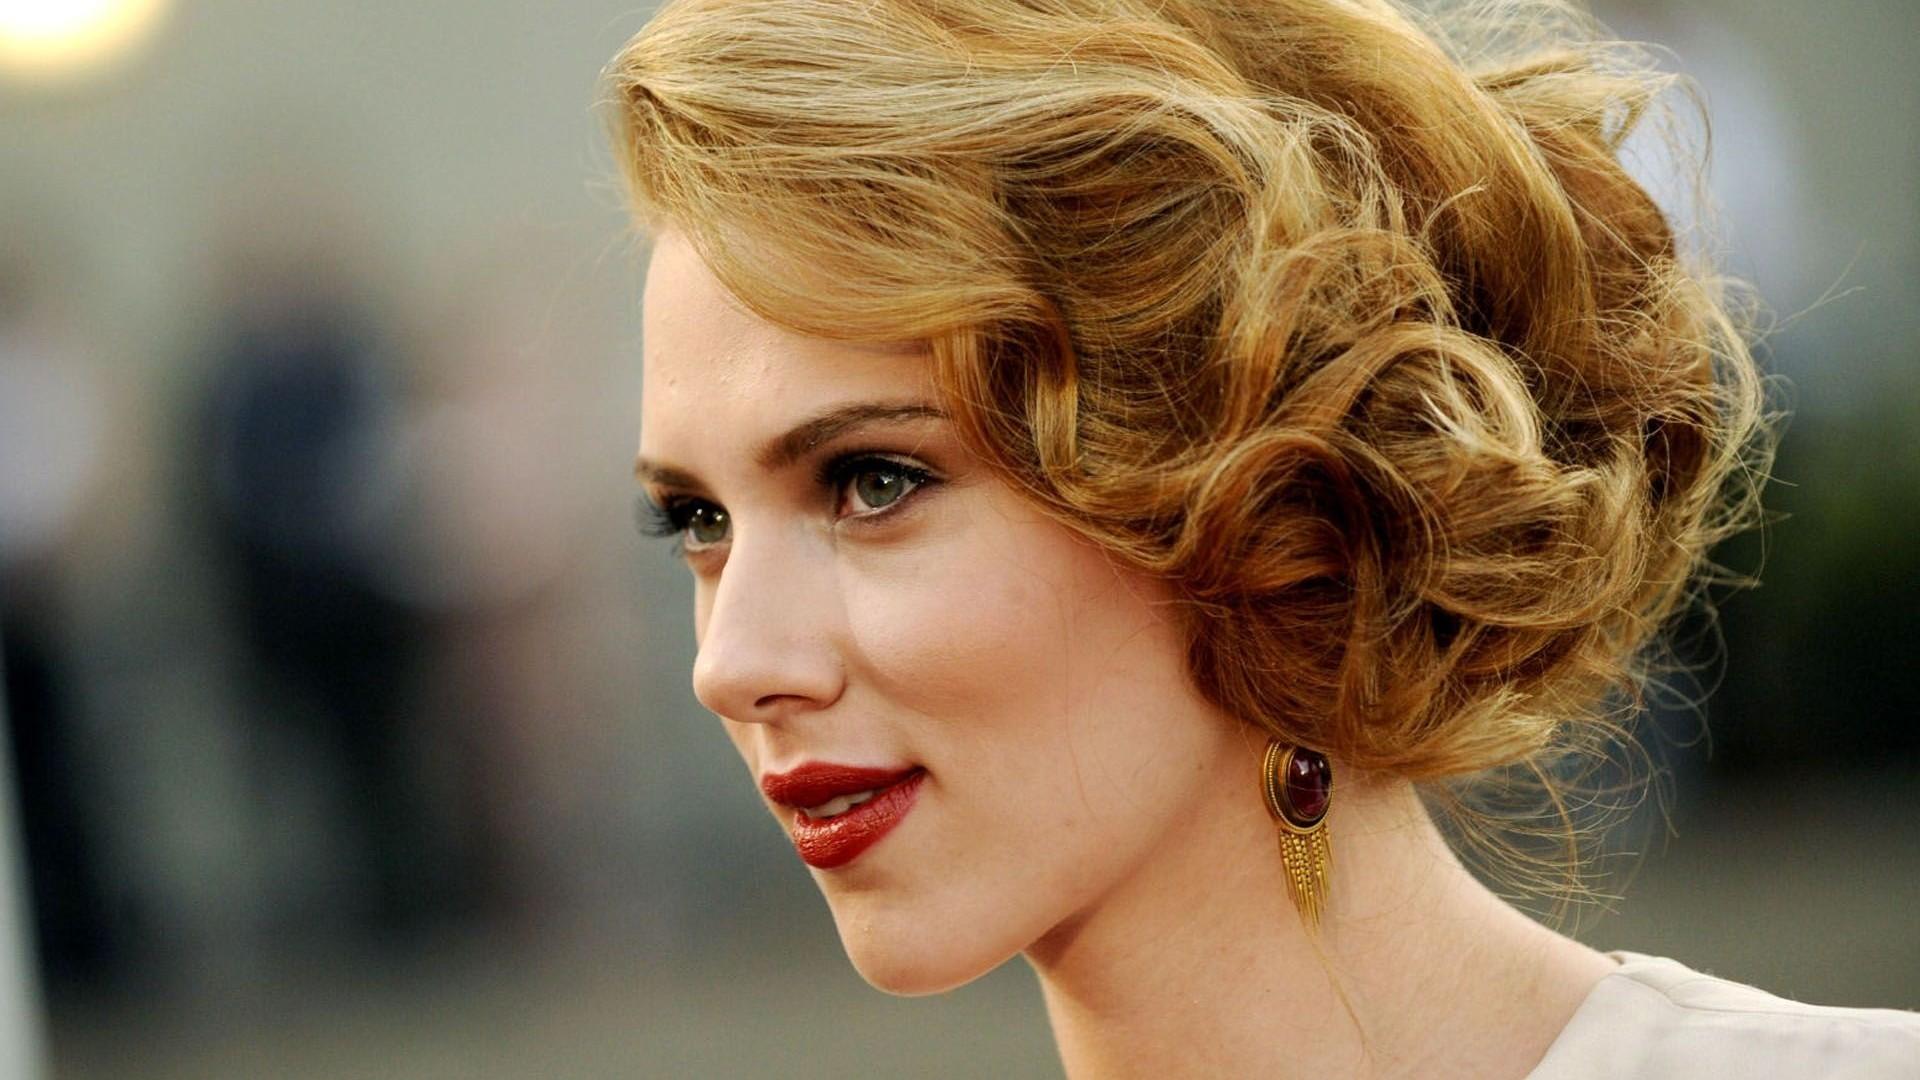 Produtores de Ghost in the Shell consideraram usar CG para mudar etnia de Scarlett Johansson